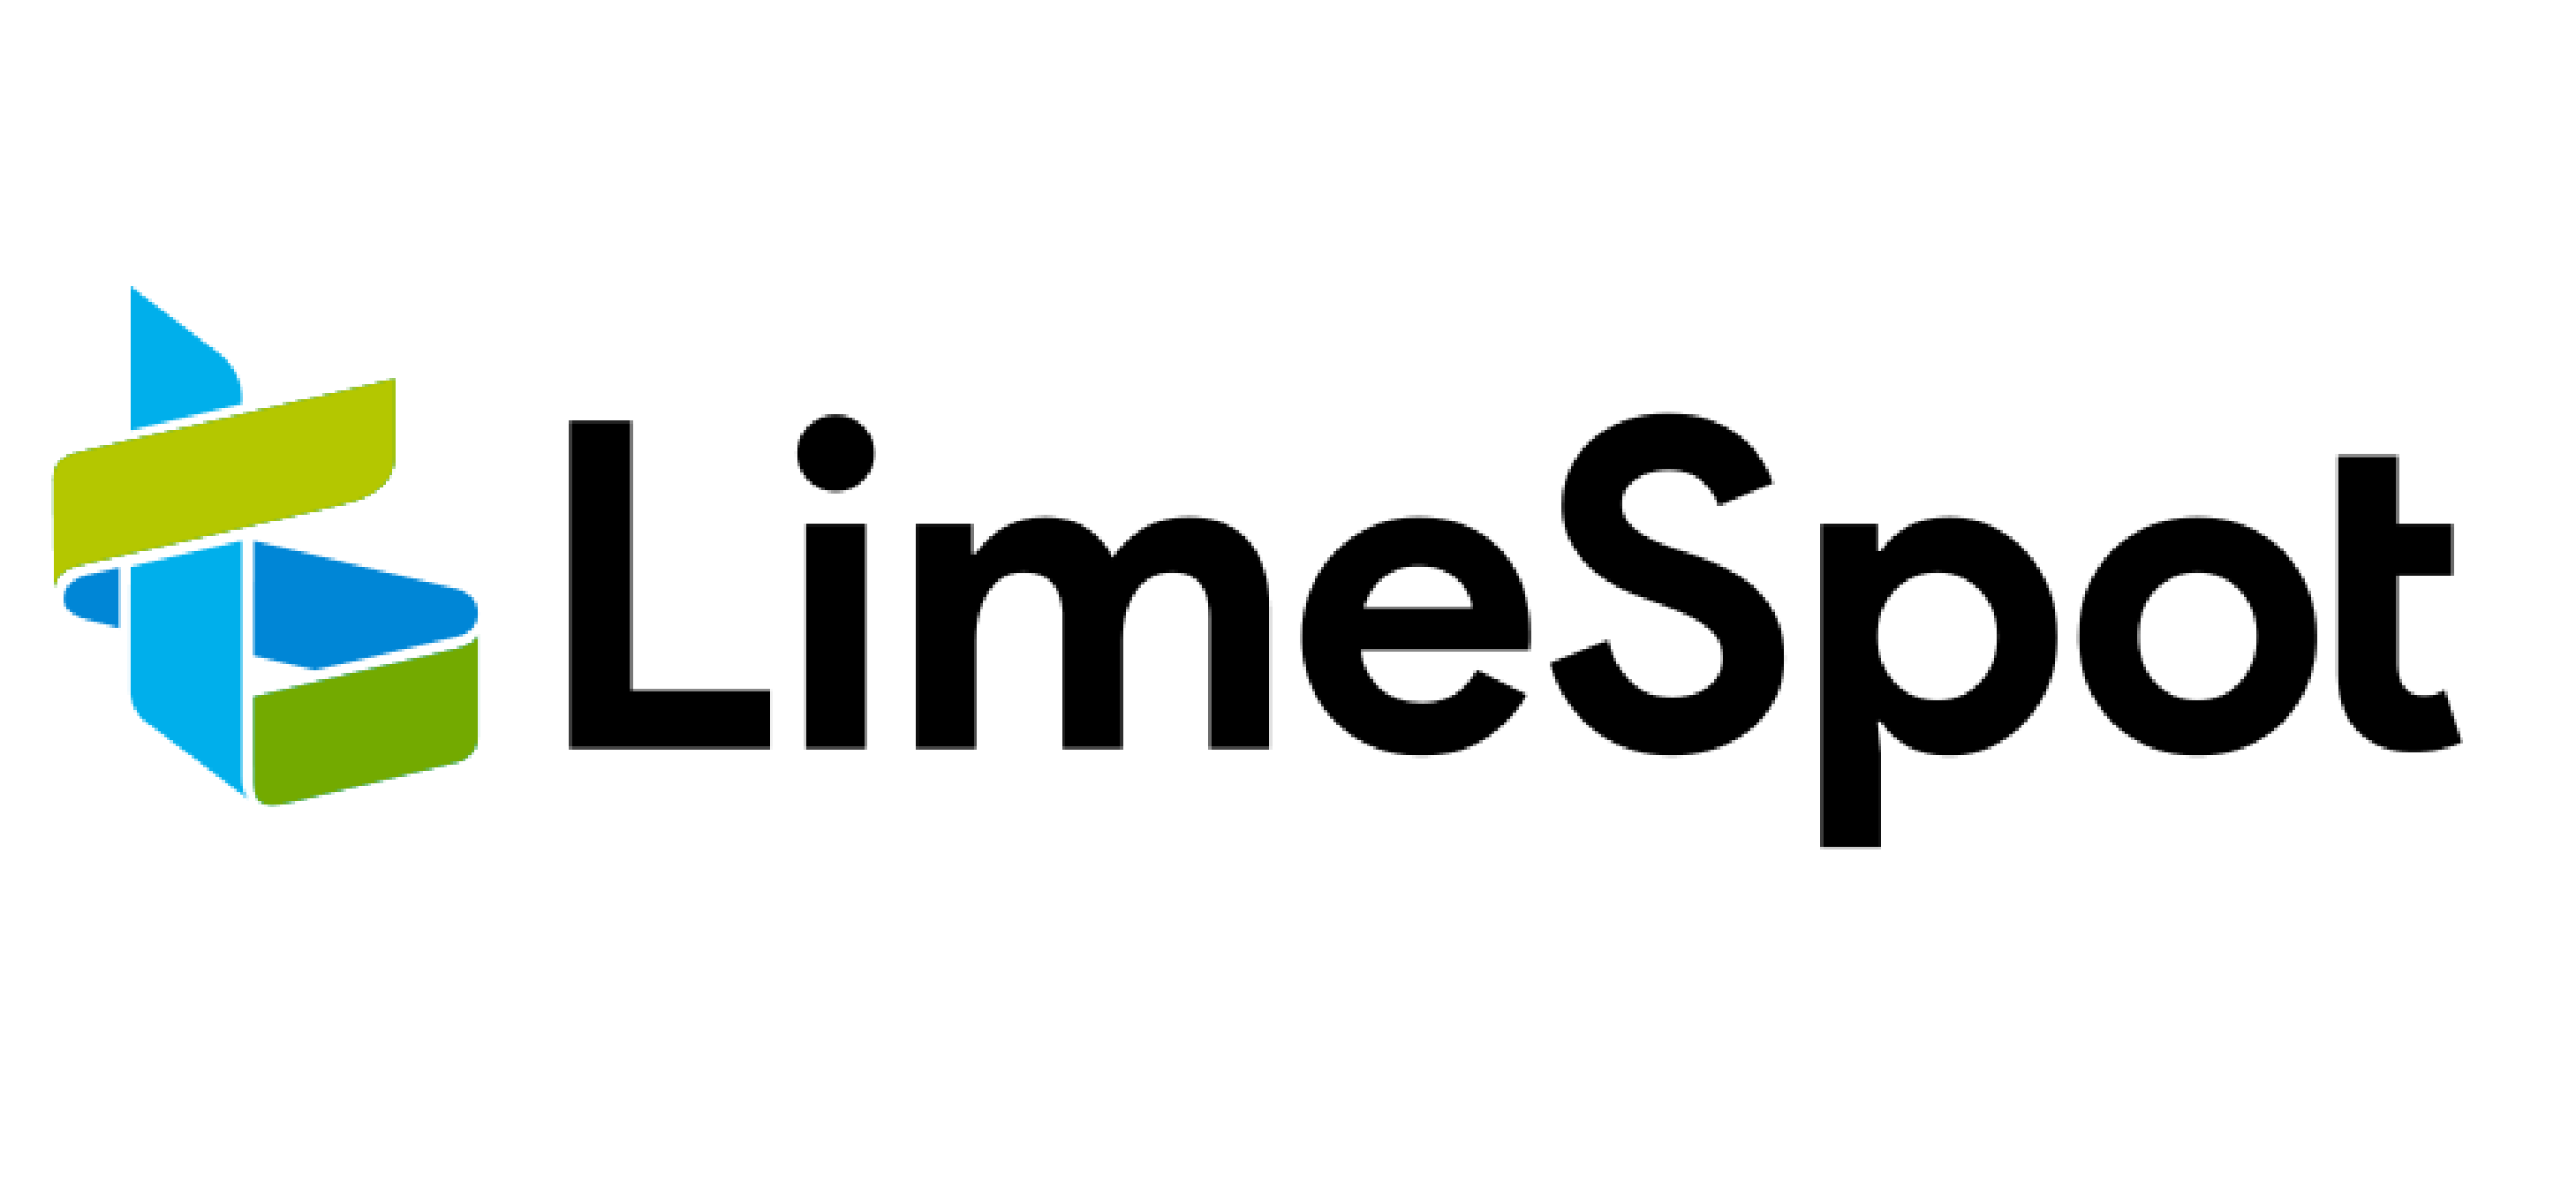 Apps limespot logo